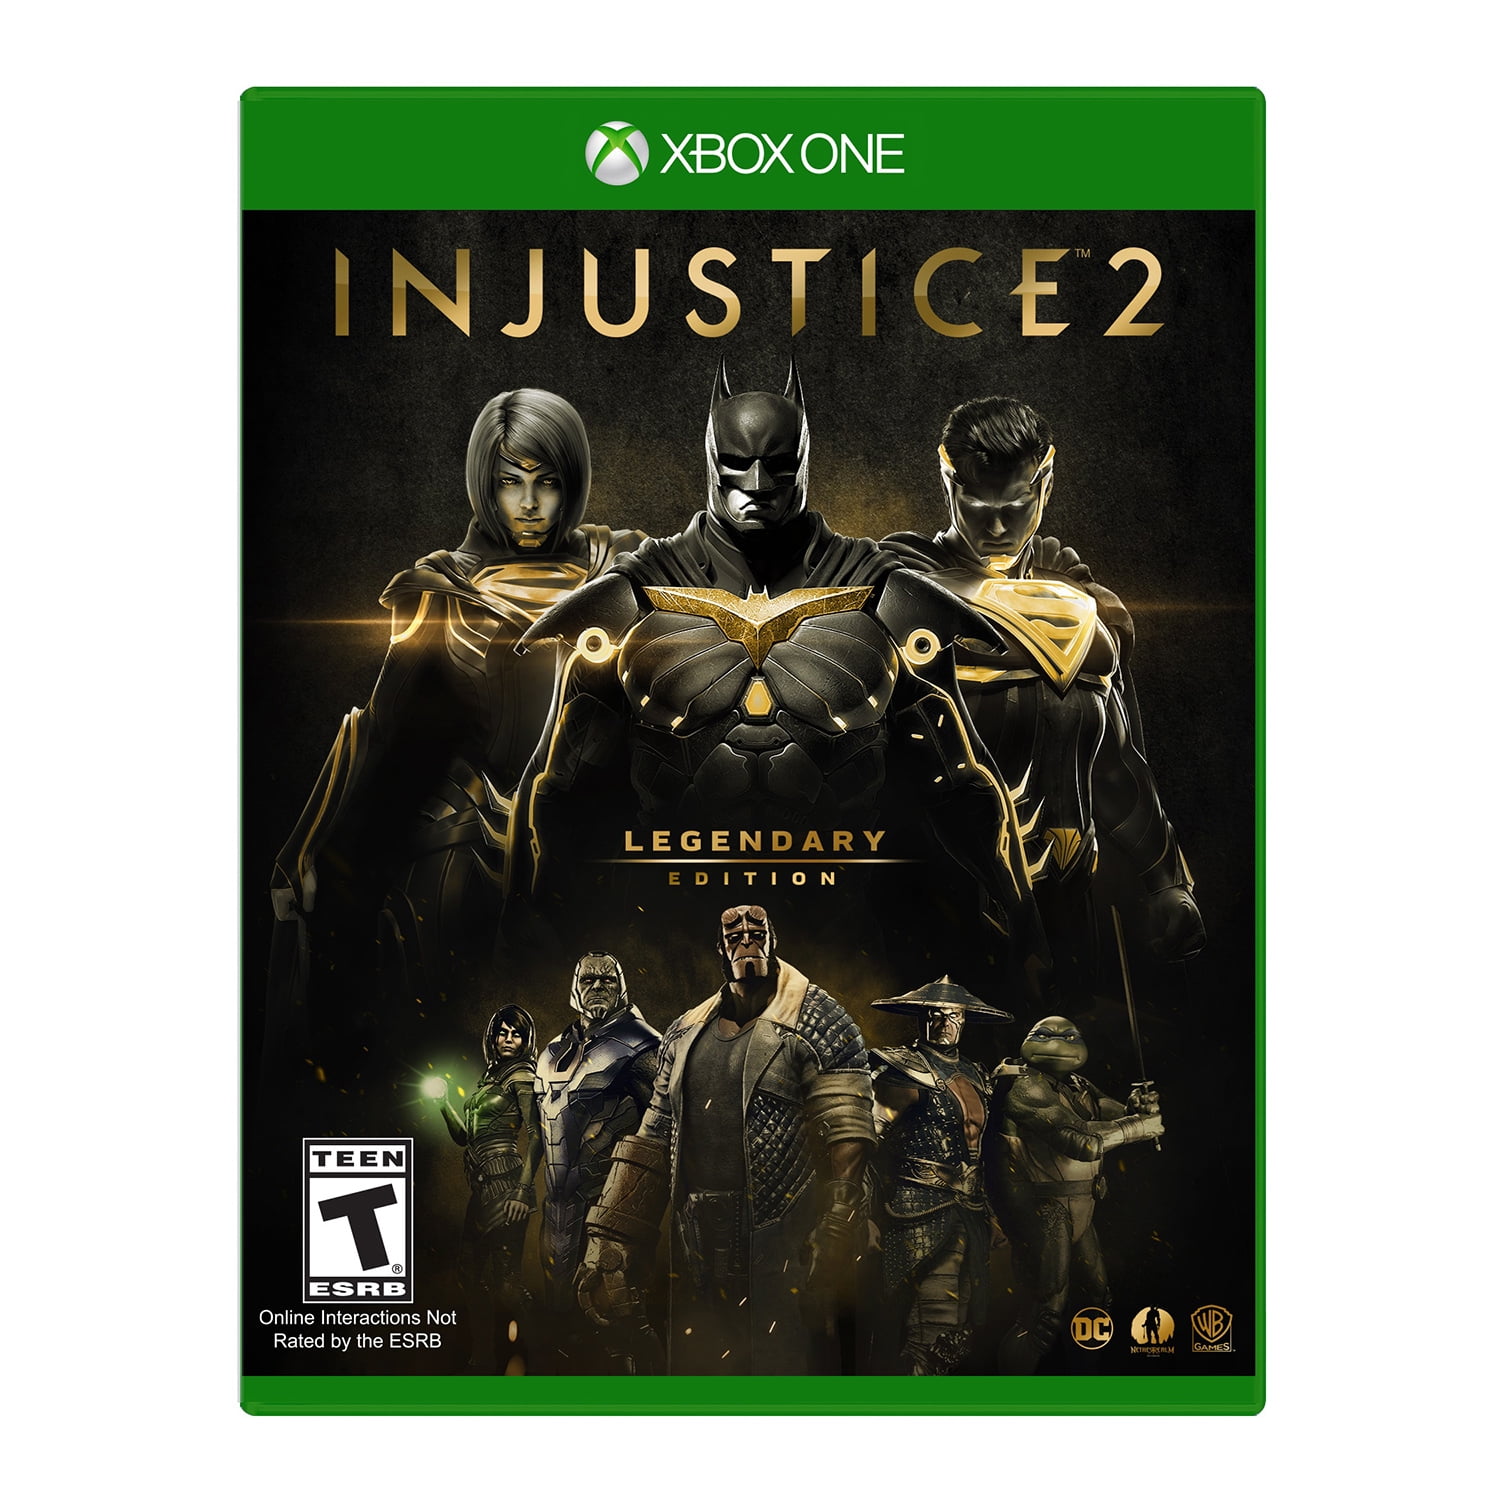 Injustice 2 Legendary Edition, Warner Bros, Xbox One